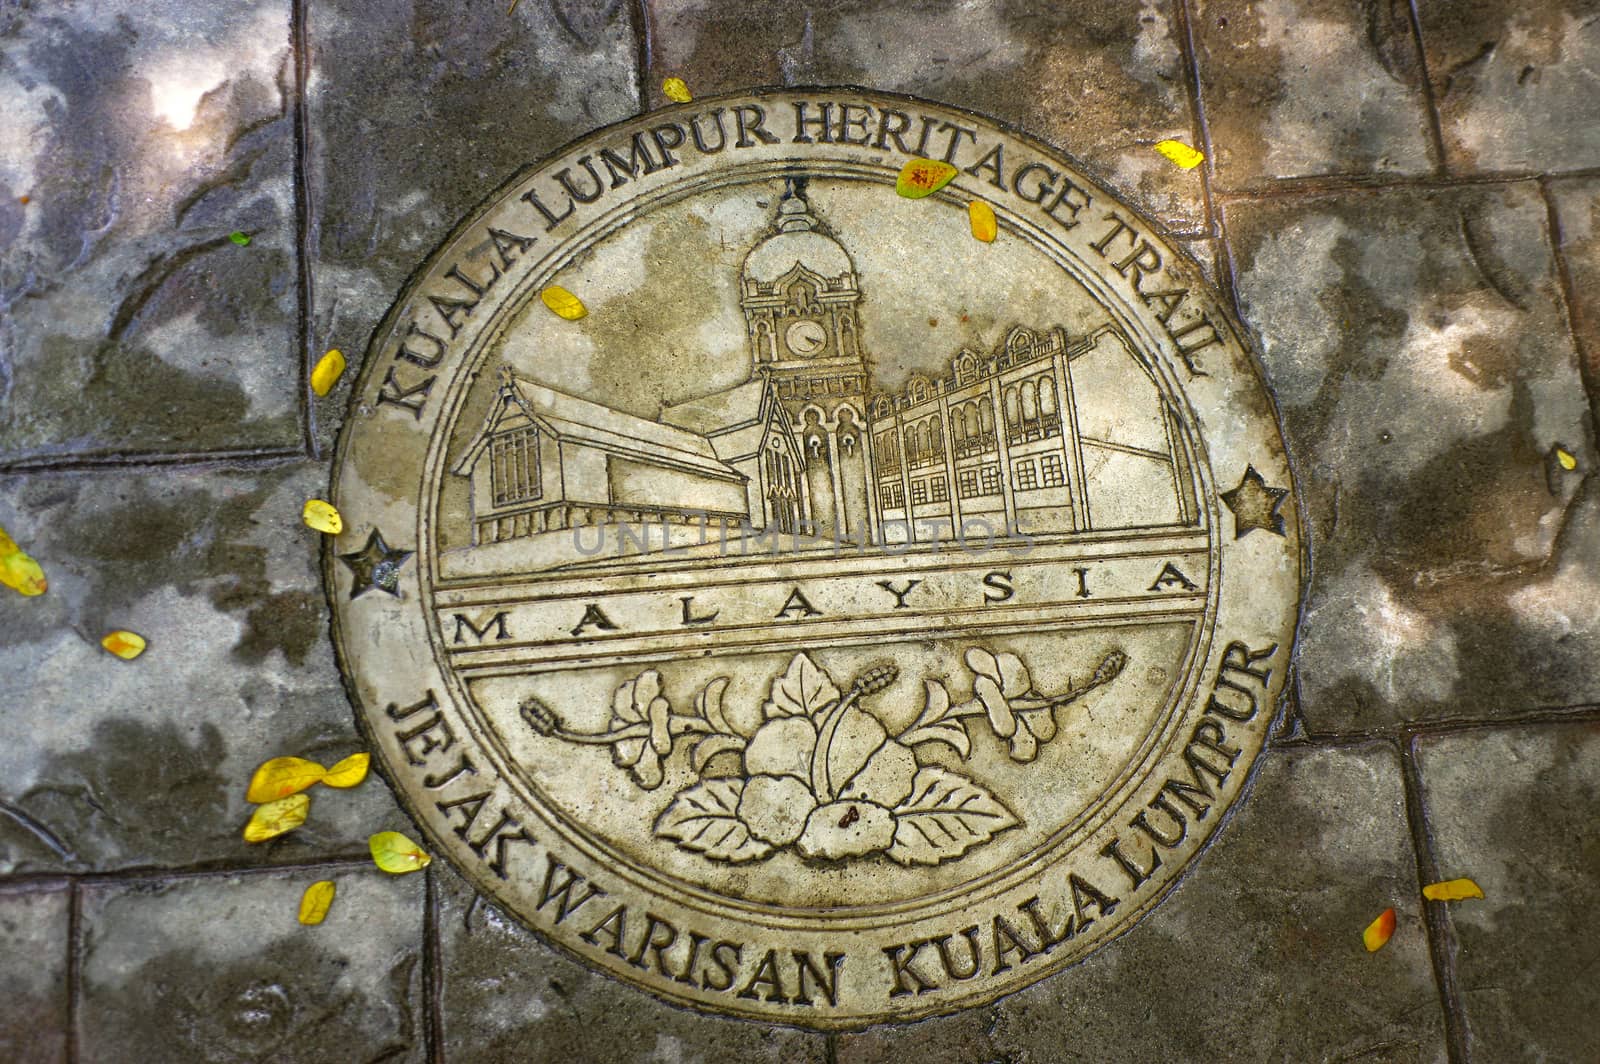 KUALA LUMPUR, MALAYSIA - JANUARY 16, 2016: a round memorial pate on ground - symbol of the city.